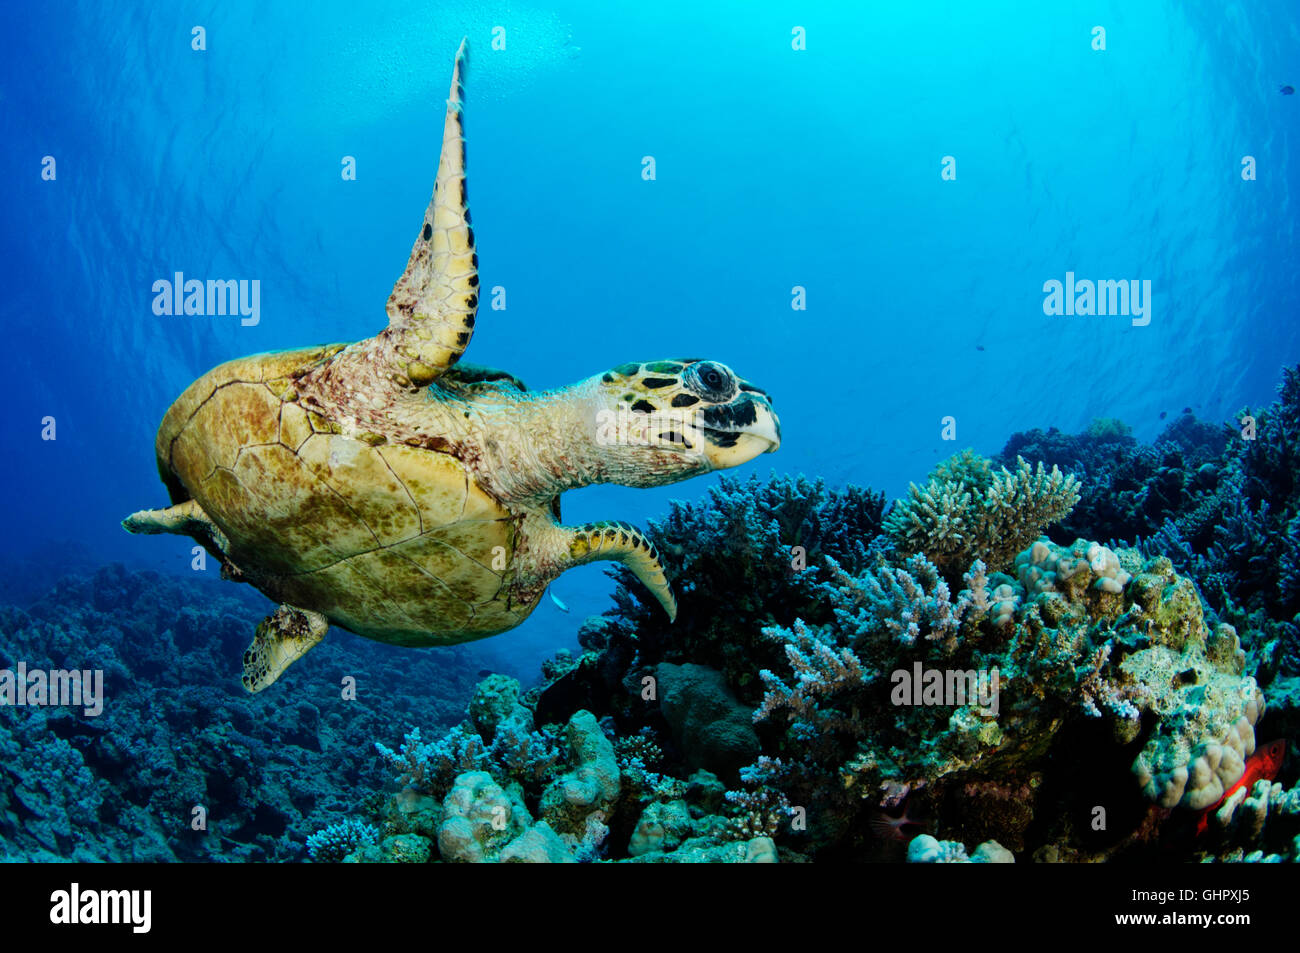 Eretmochelys imbricata, la tortuga de carey en coralreef, Hurghada, Giftun Island Reef, Mar Rojo, Egipto, África Foto de stock